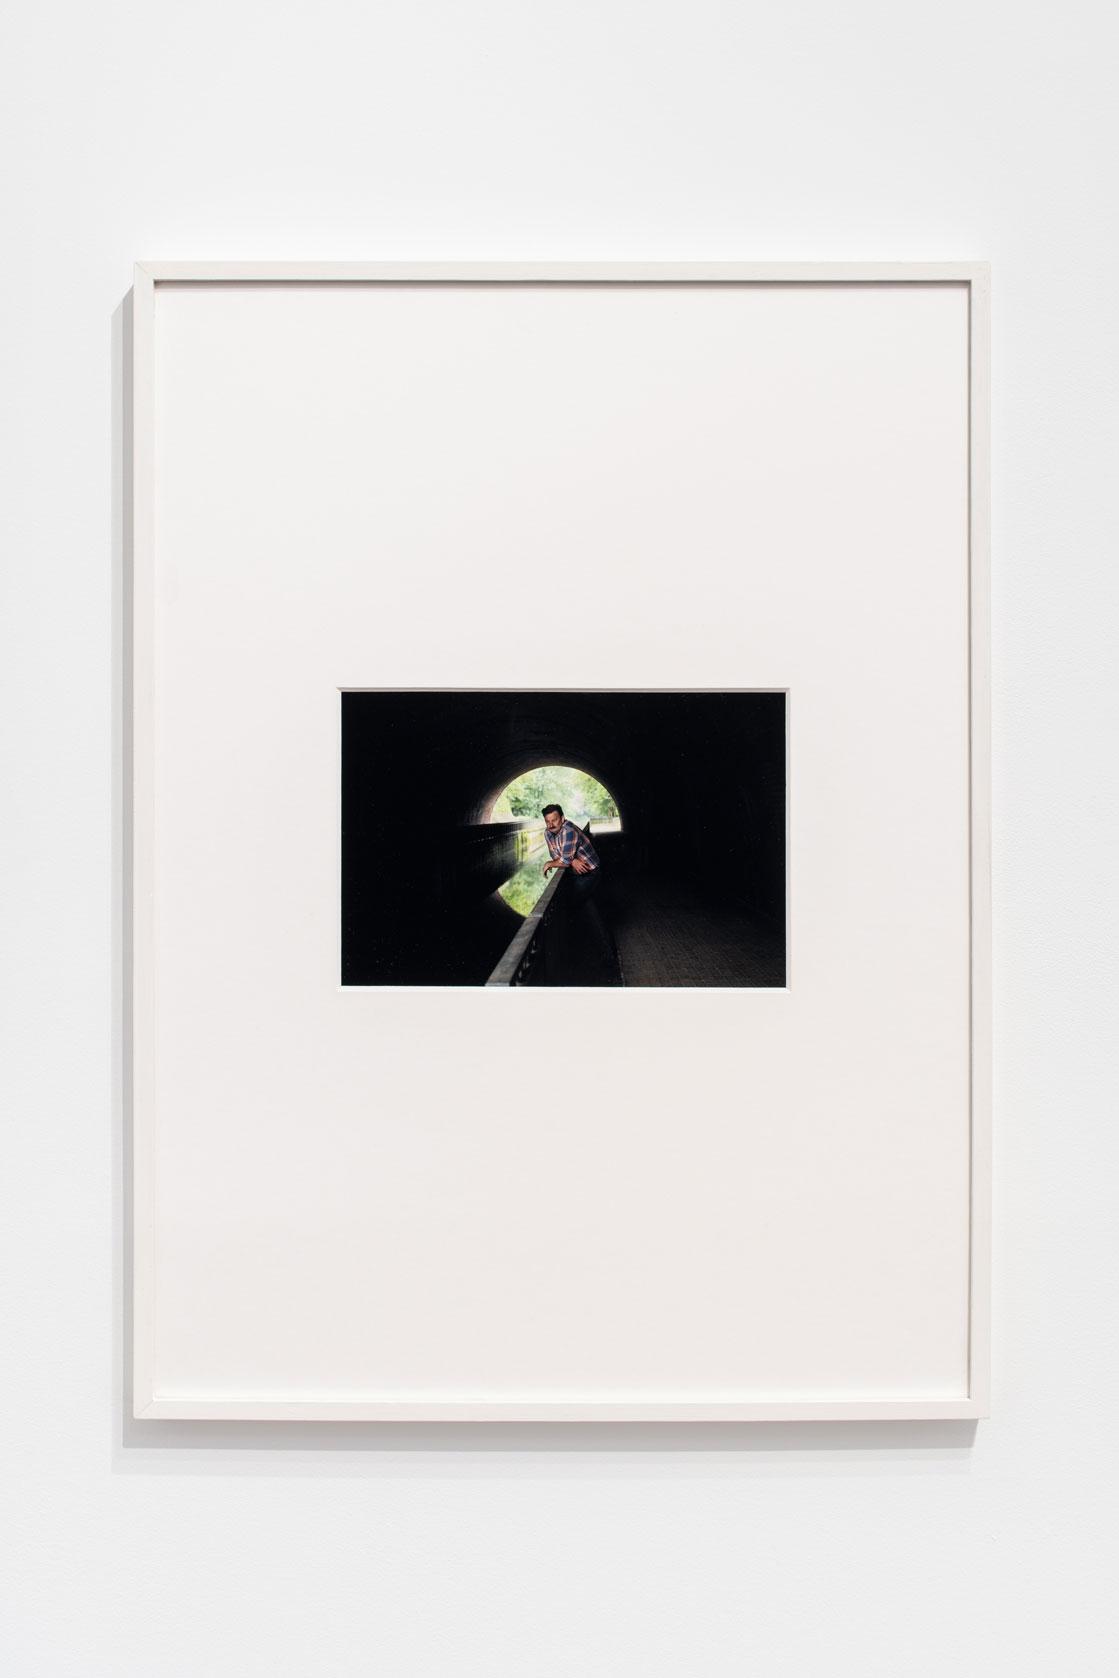 Alain Guiraudie Lambert Tunnel, 2018 16 × 24 cm, Lambda print Edition 1/3 + 1 AP Courtesy of the artist and Crèvecoeur. Photography: Martin Argyroglo.